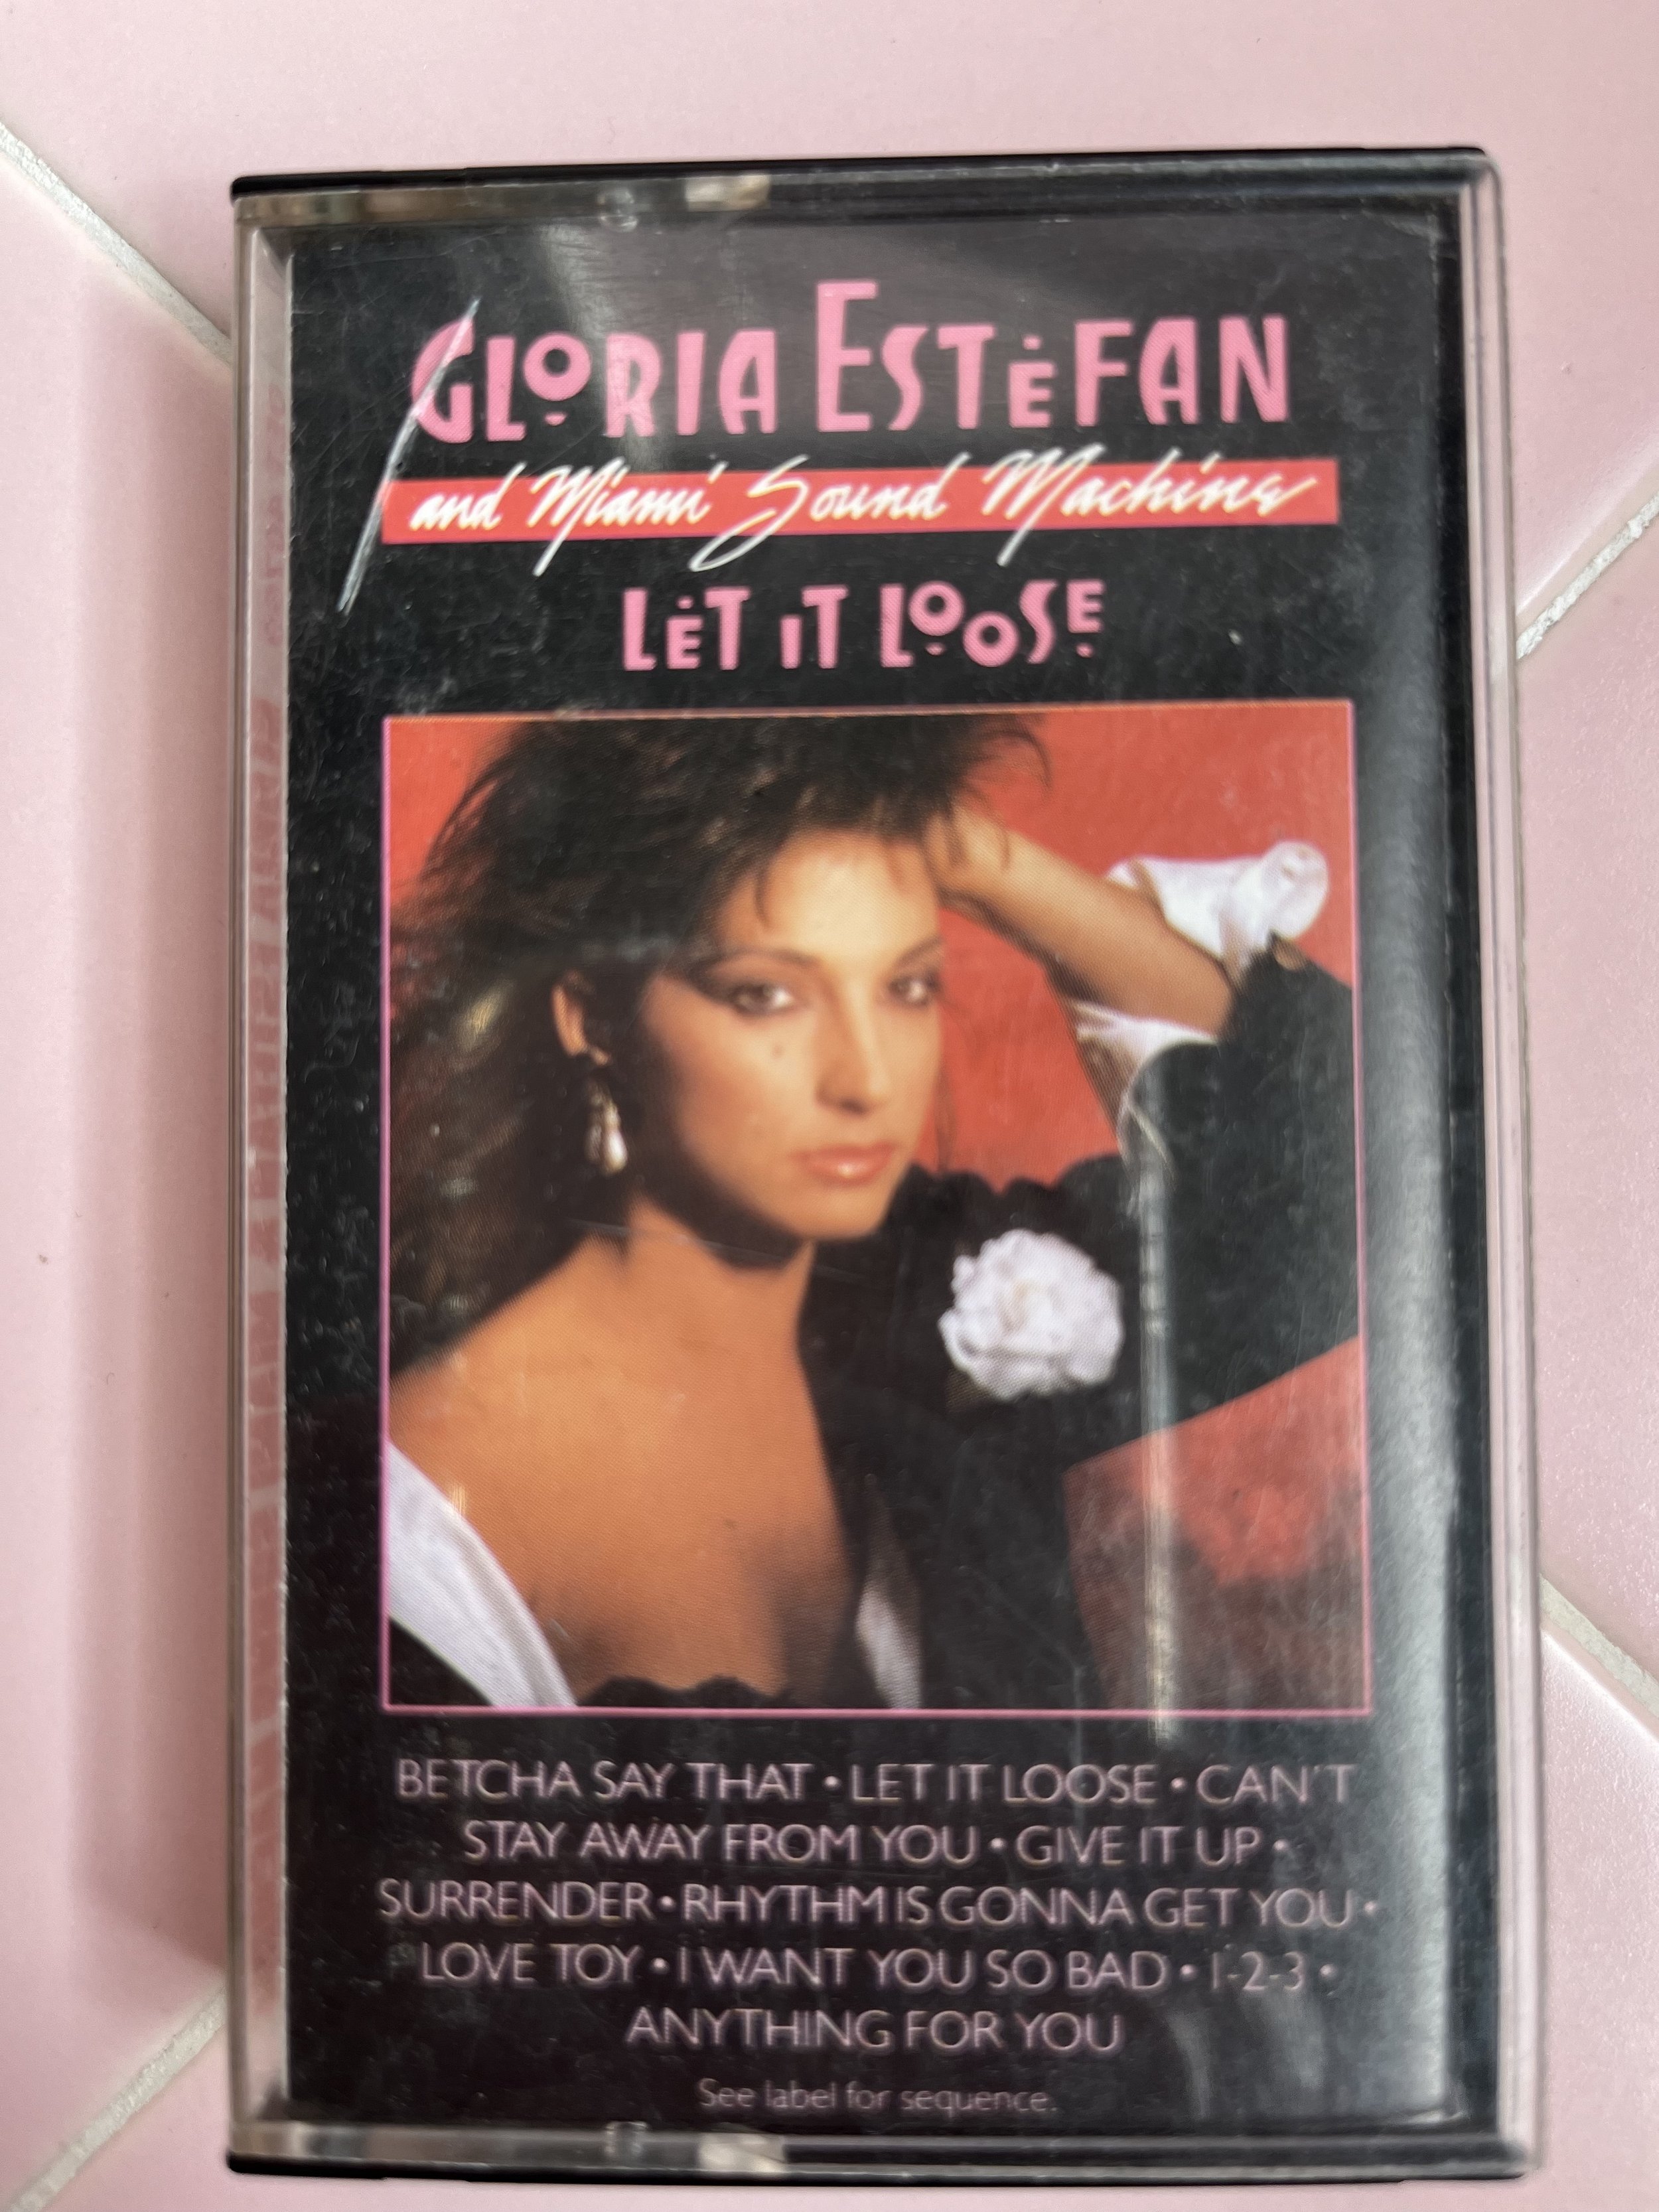 my favorite cassette